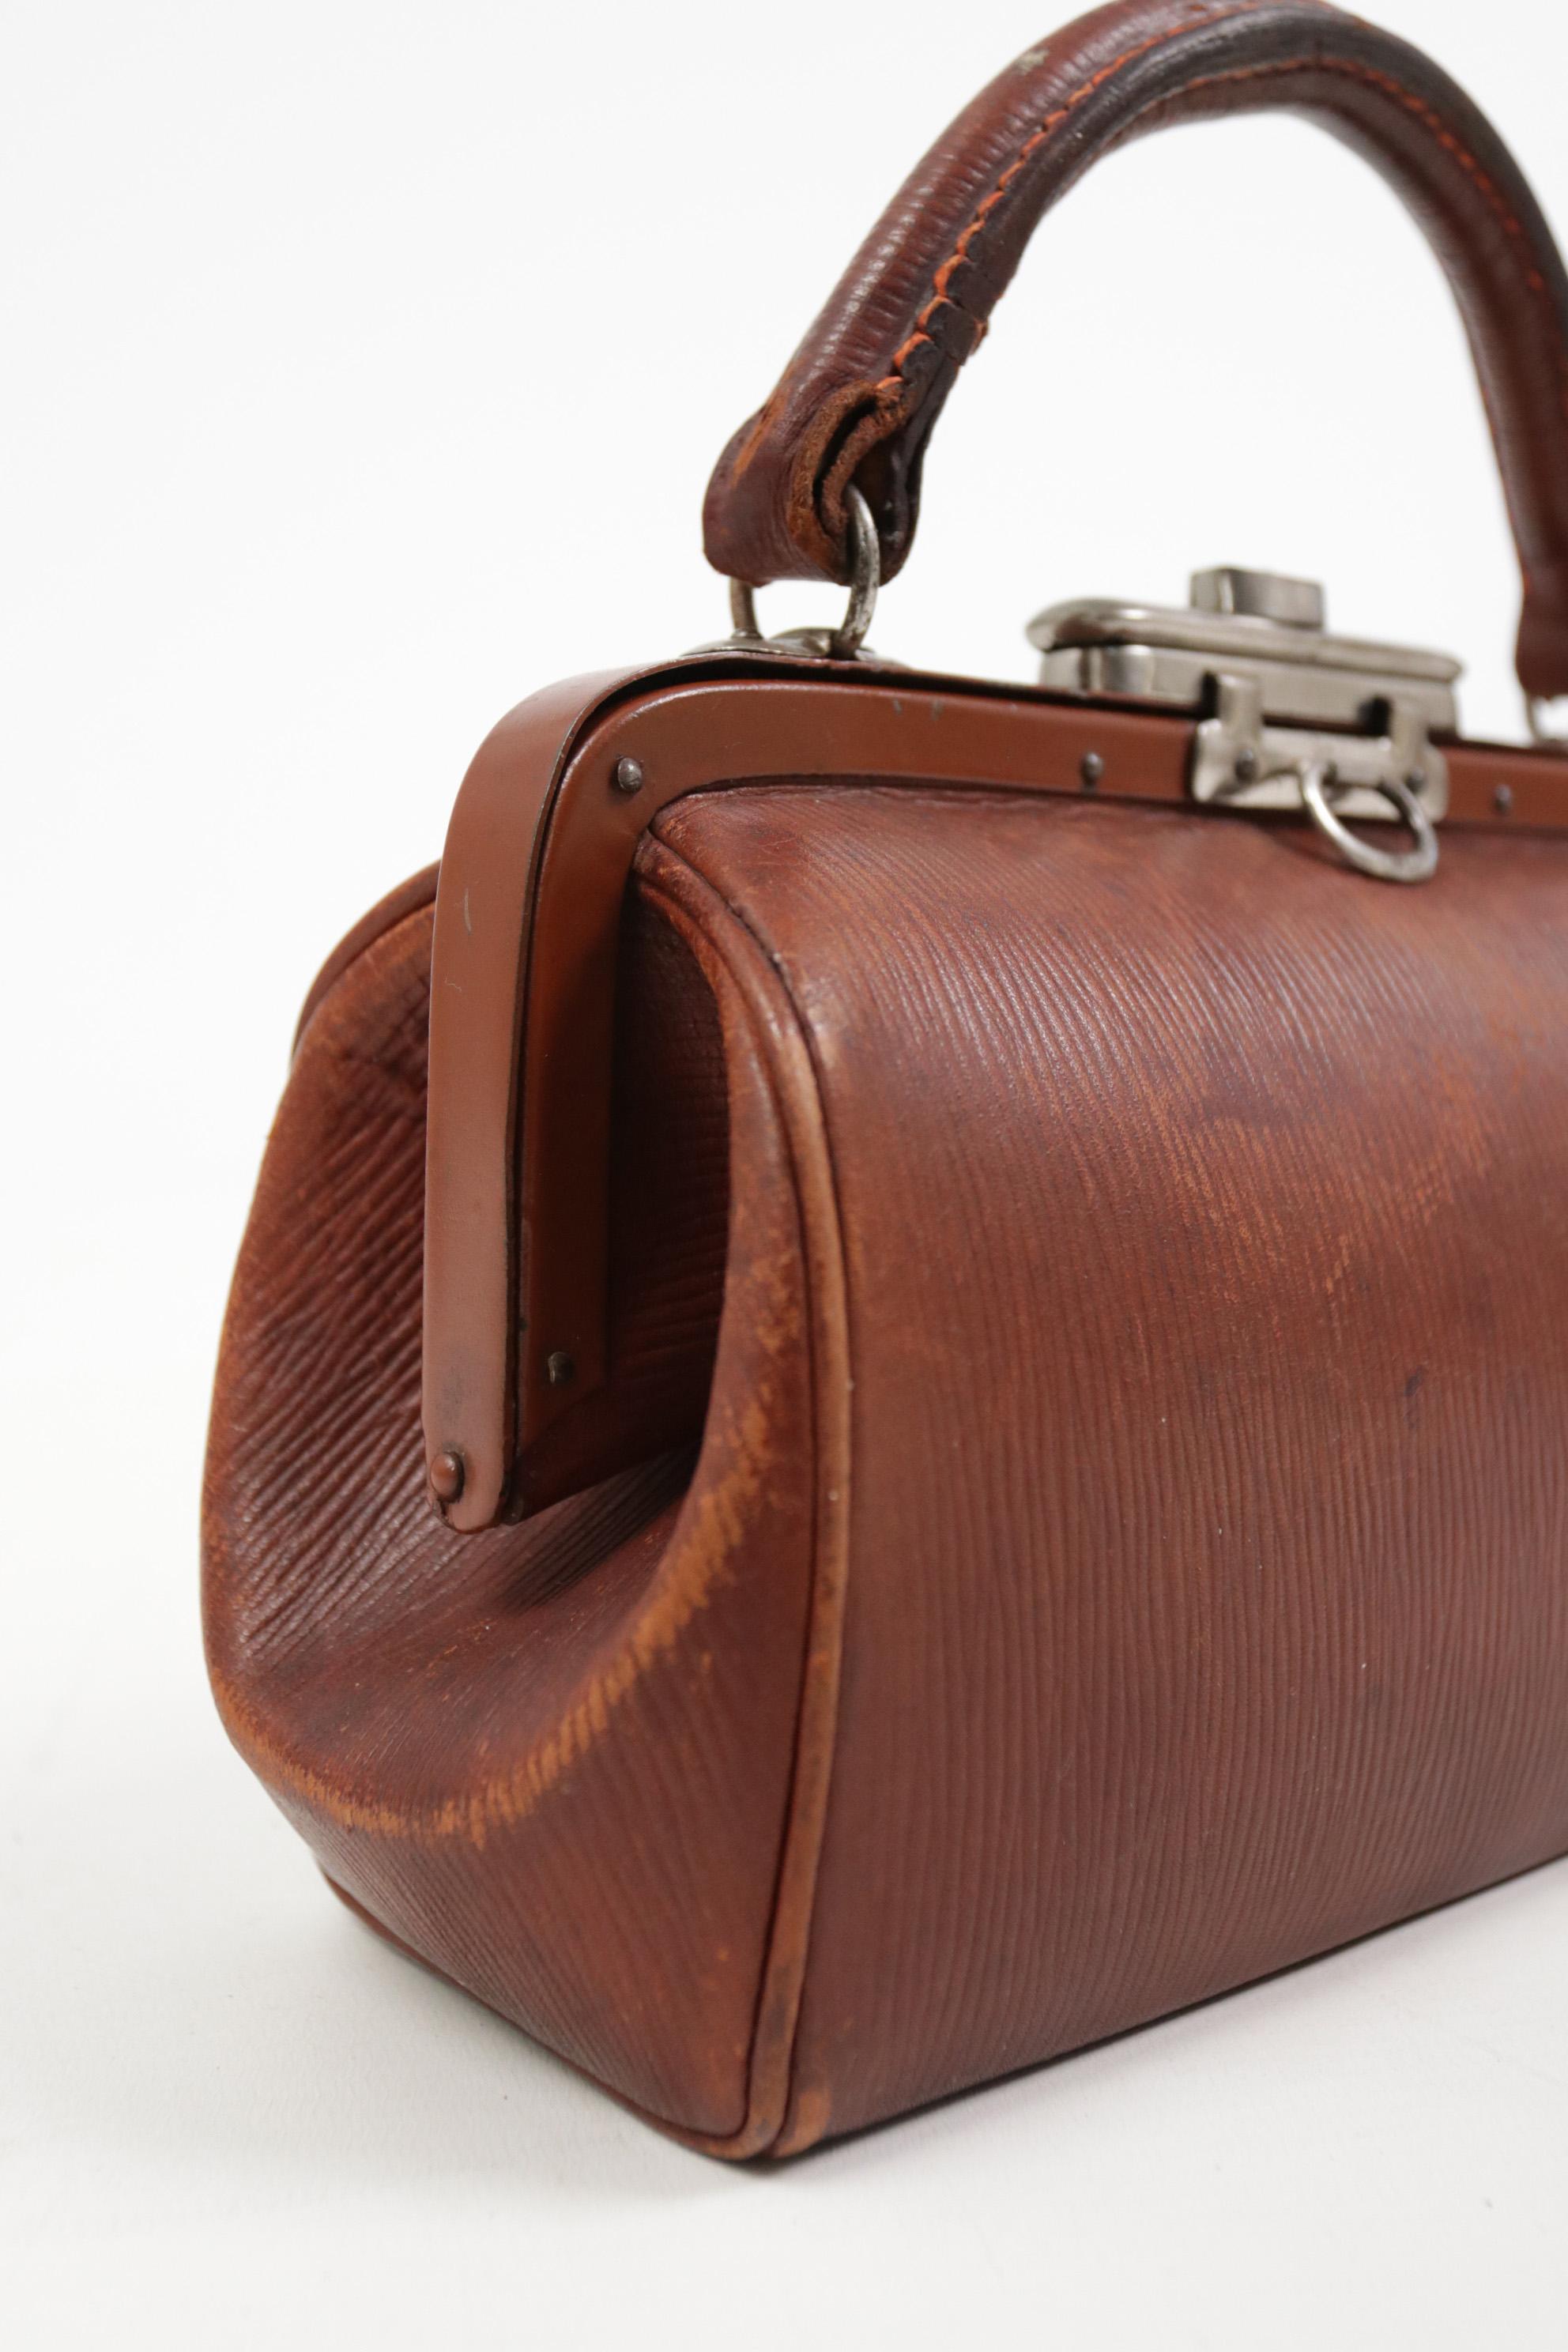 Embossed Art Deco Ribbed Leather Brown Handbag c. 1920 For Sale